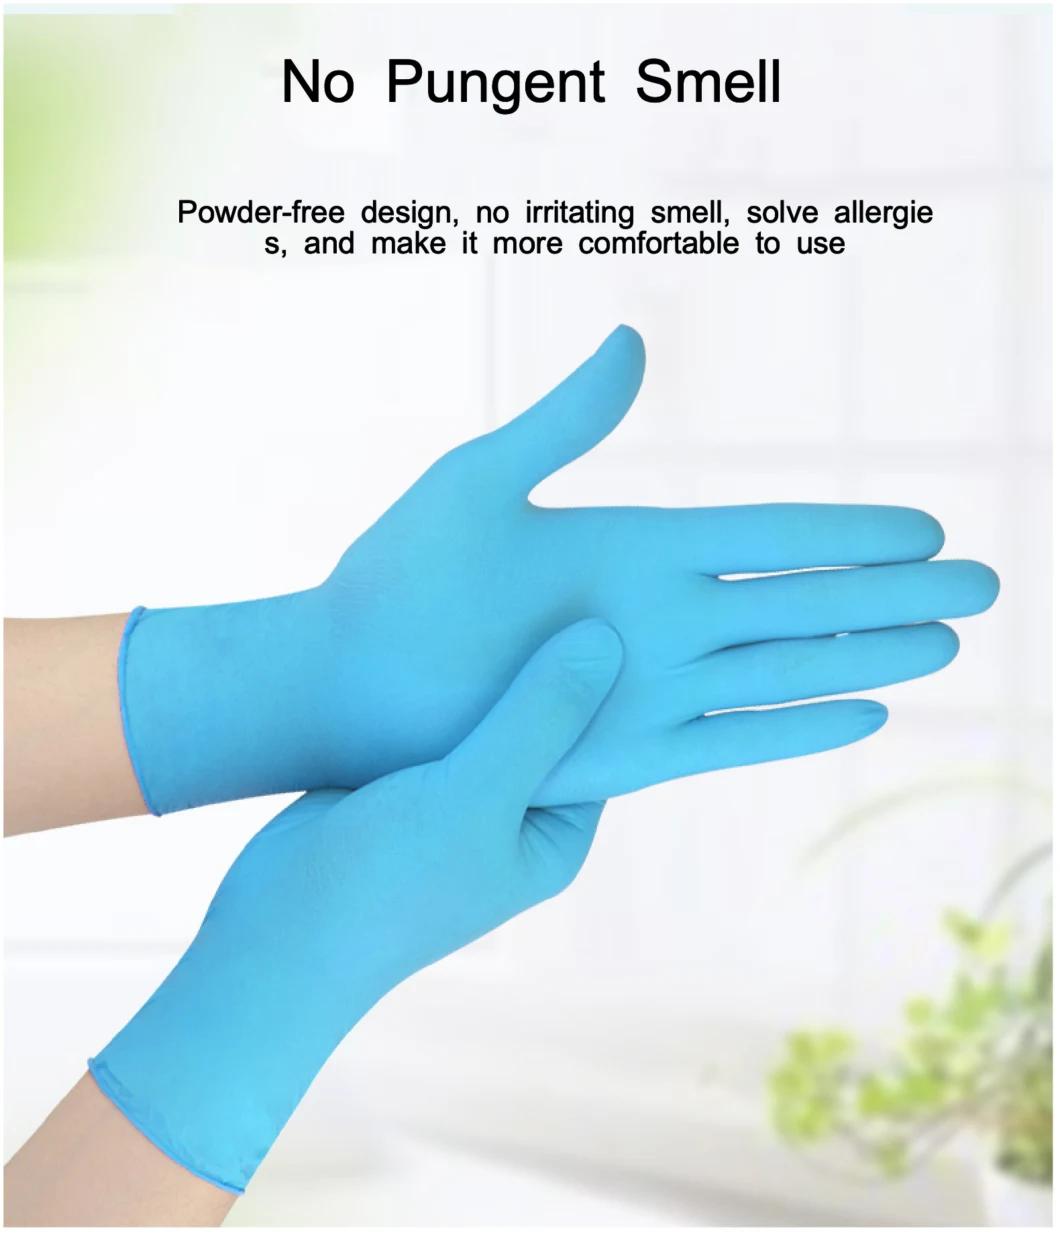 510K En455 FDA CE Disposable Nitrile Examination Gloves for Multi-Domain Use